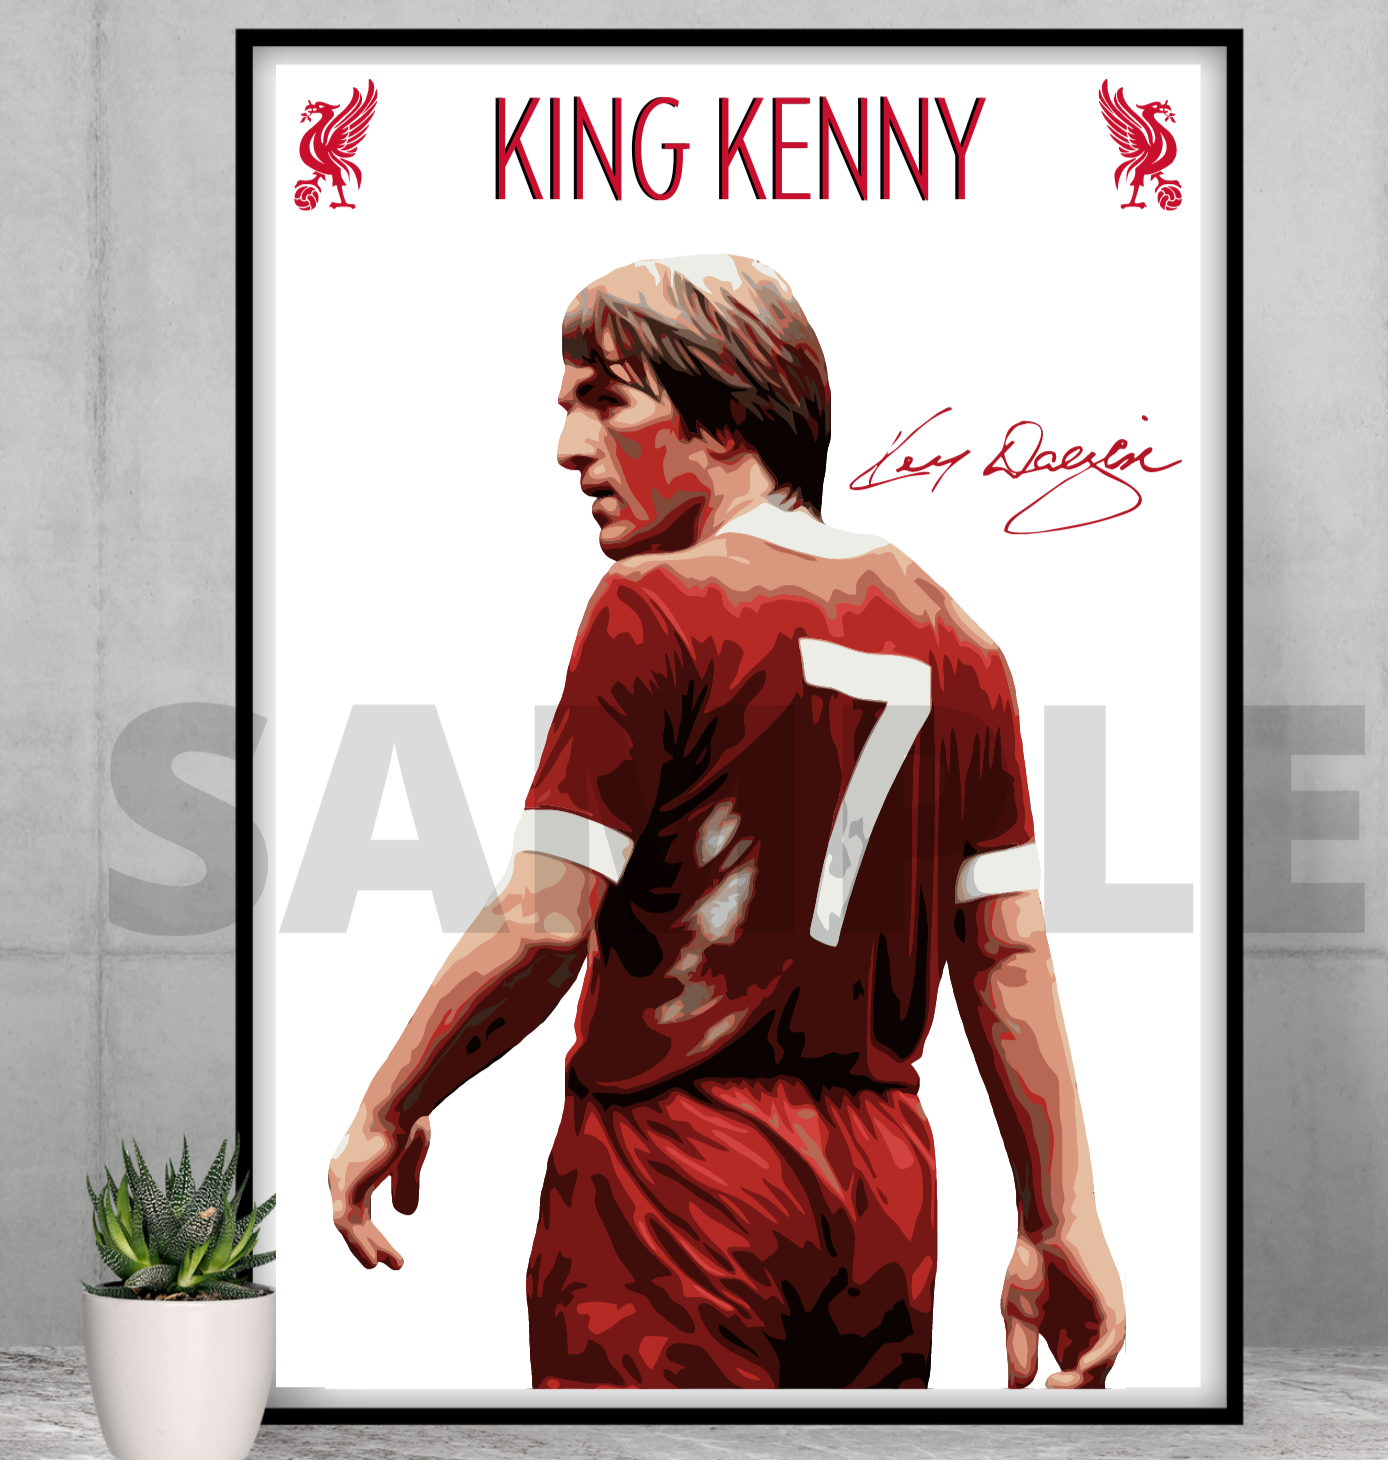 King Kenny Dalglish Liverpool Football memorabilia/collectable signed